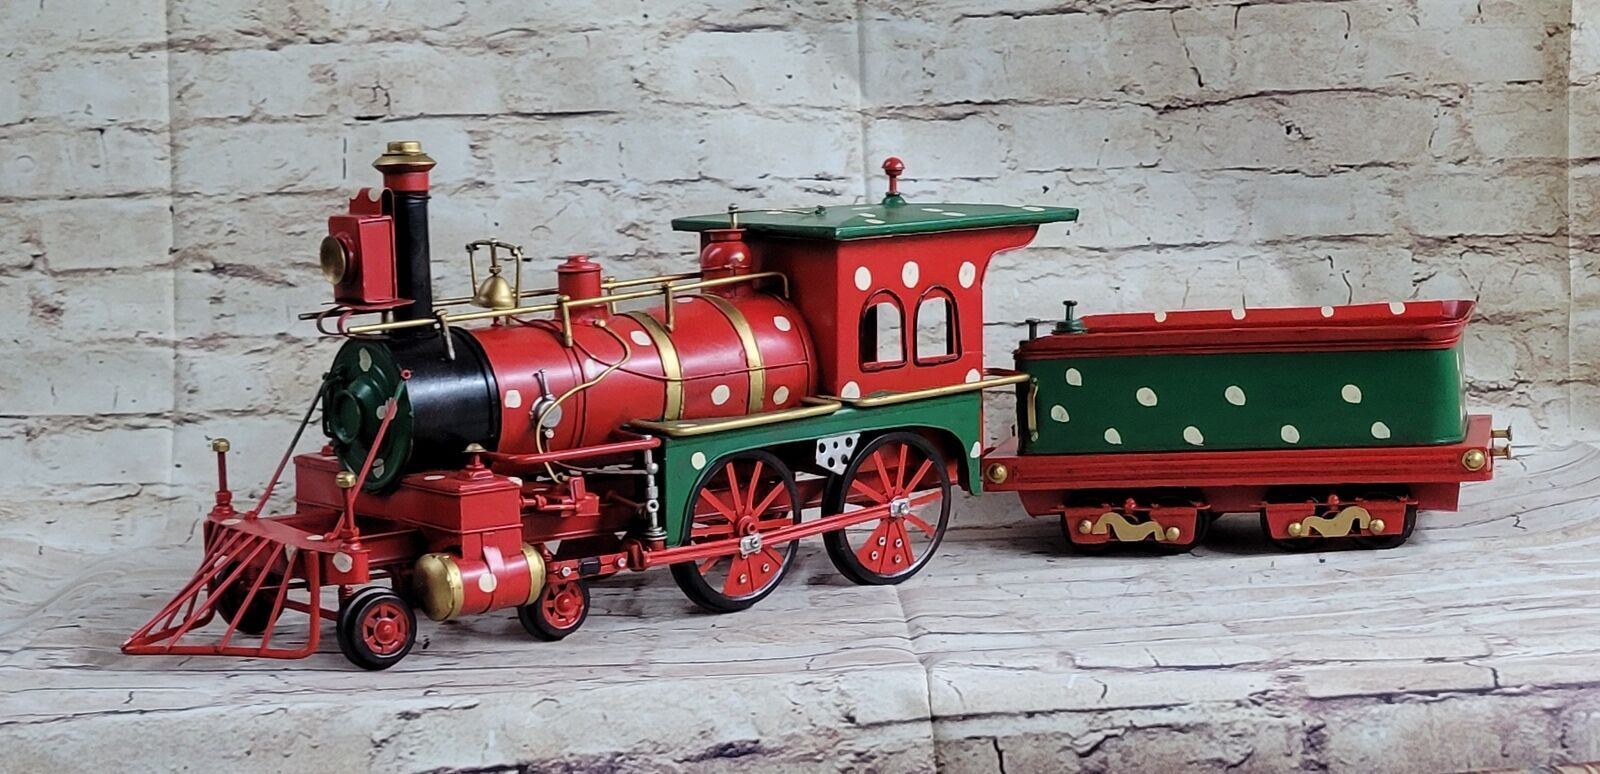 Model Steam Train Great Quality Artwork Collector Edition Sculpture Desktop